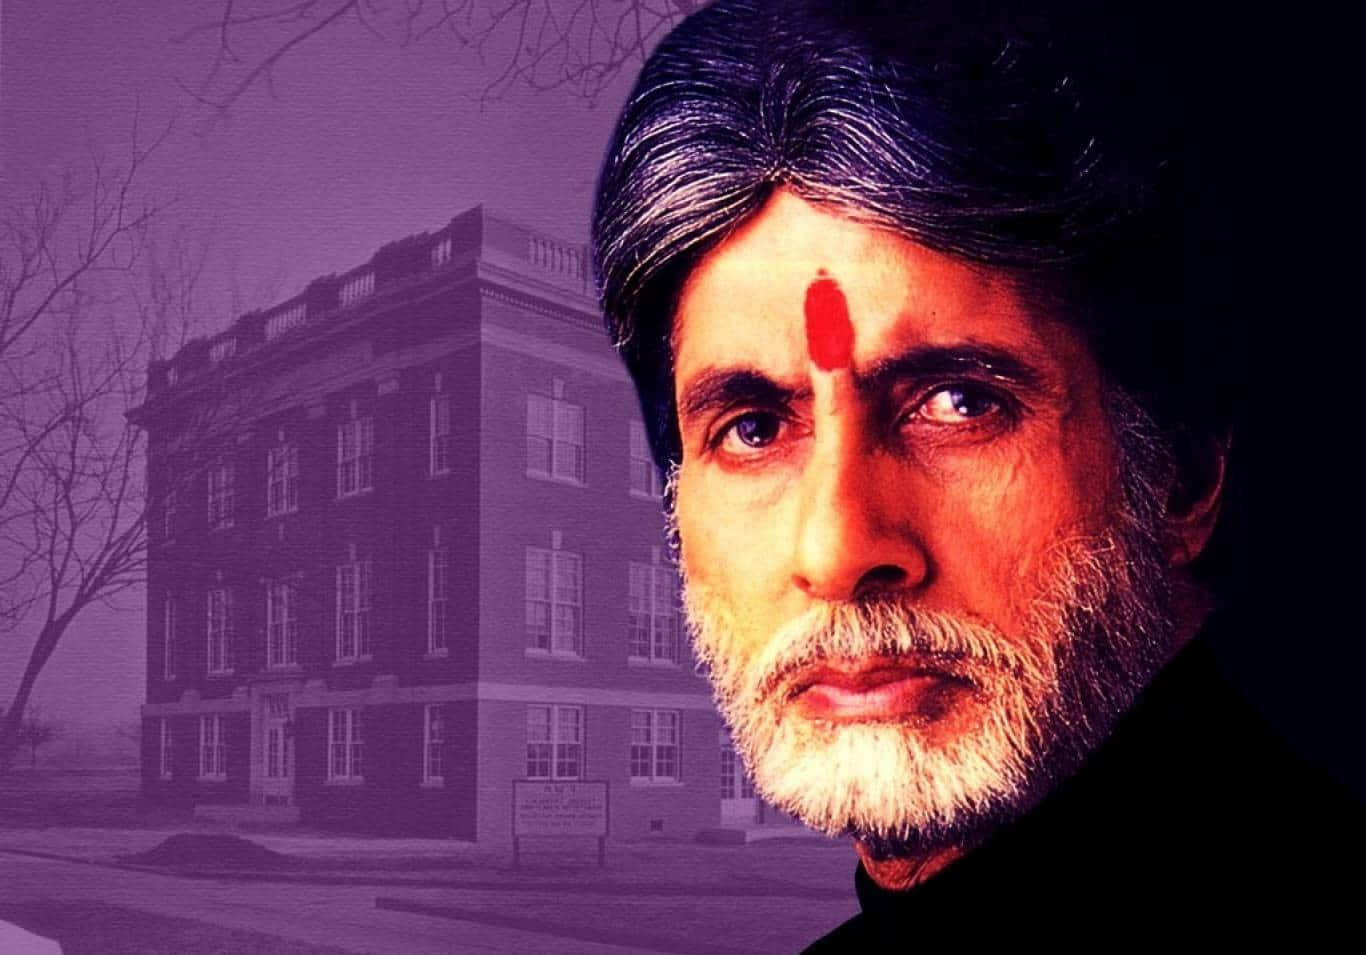 Hintergrundbildvon Amitabh Bachchan